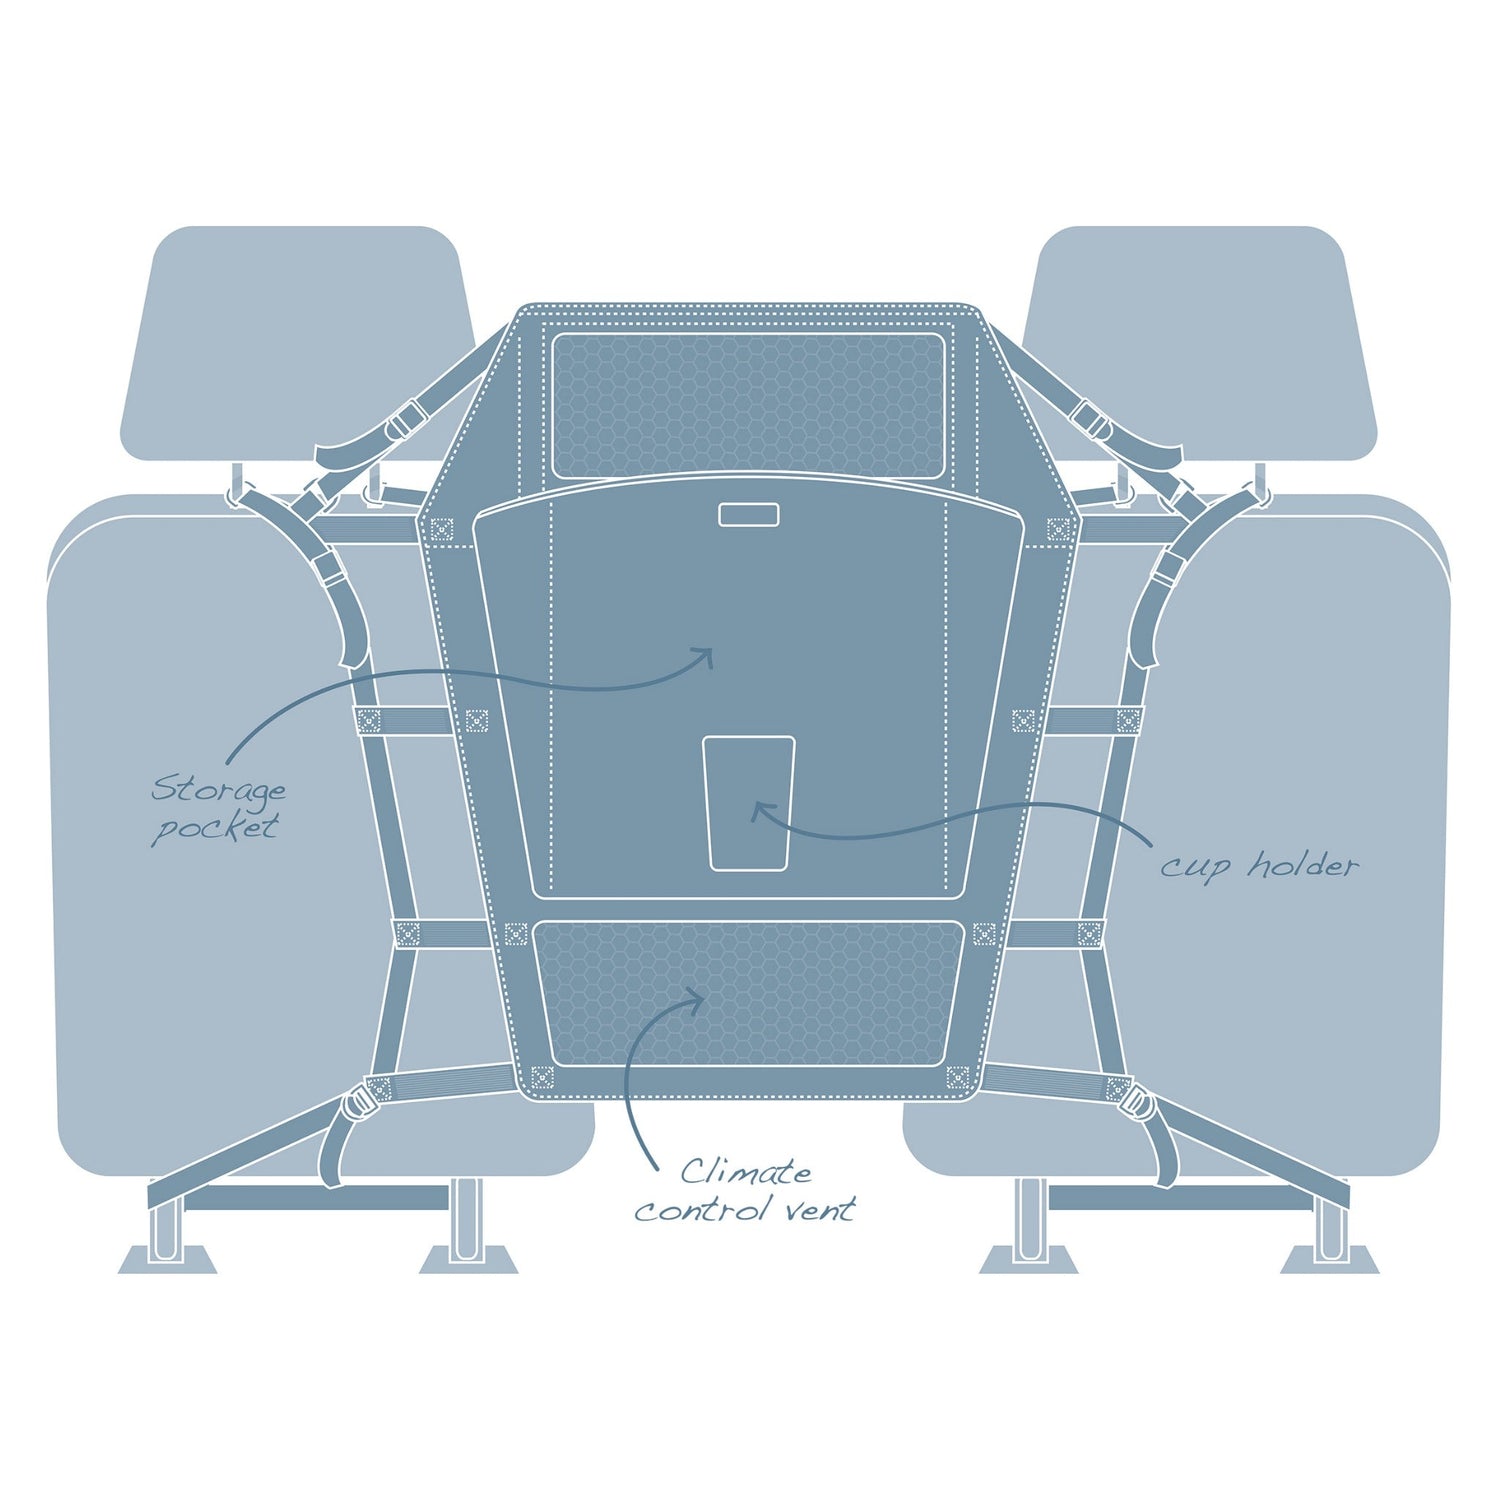 Kurgo Backseat Barrier, Hunde Autorücksitz Abtrennung - Woofshack